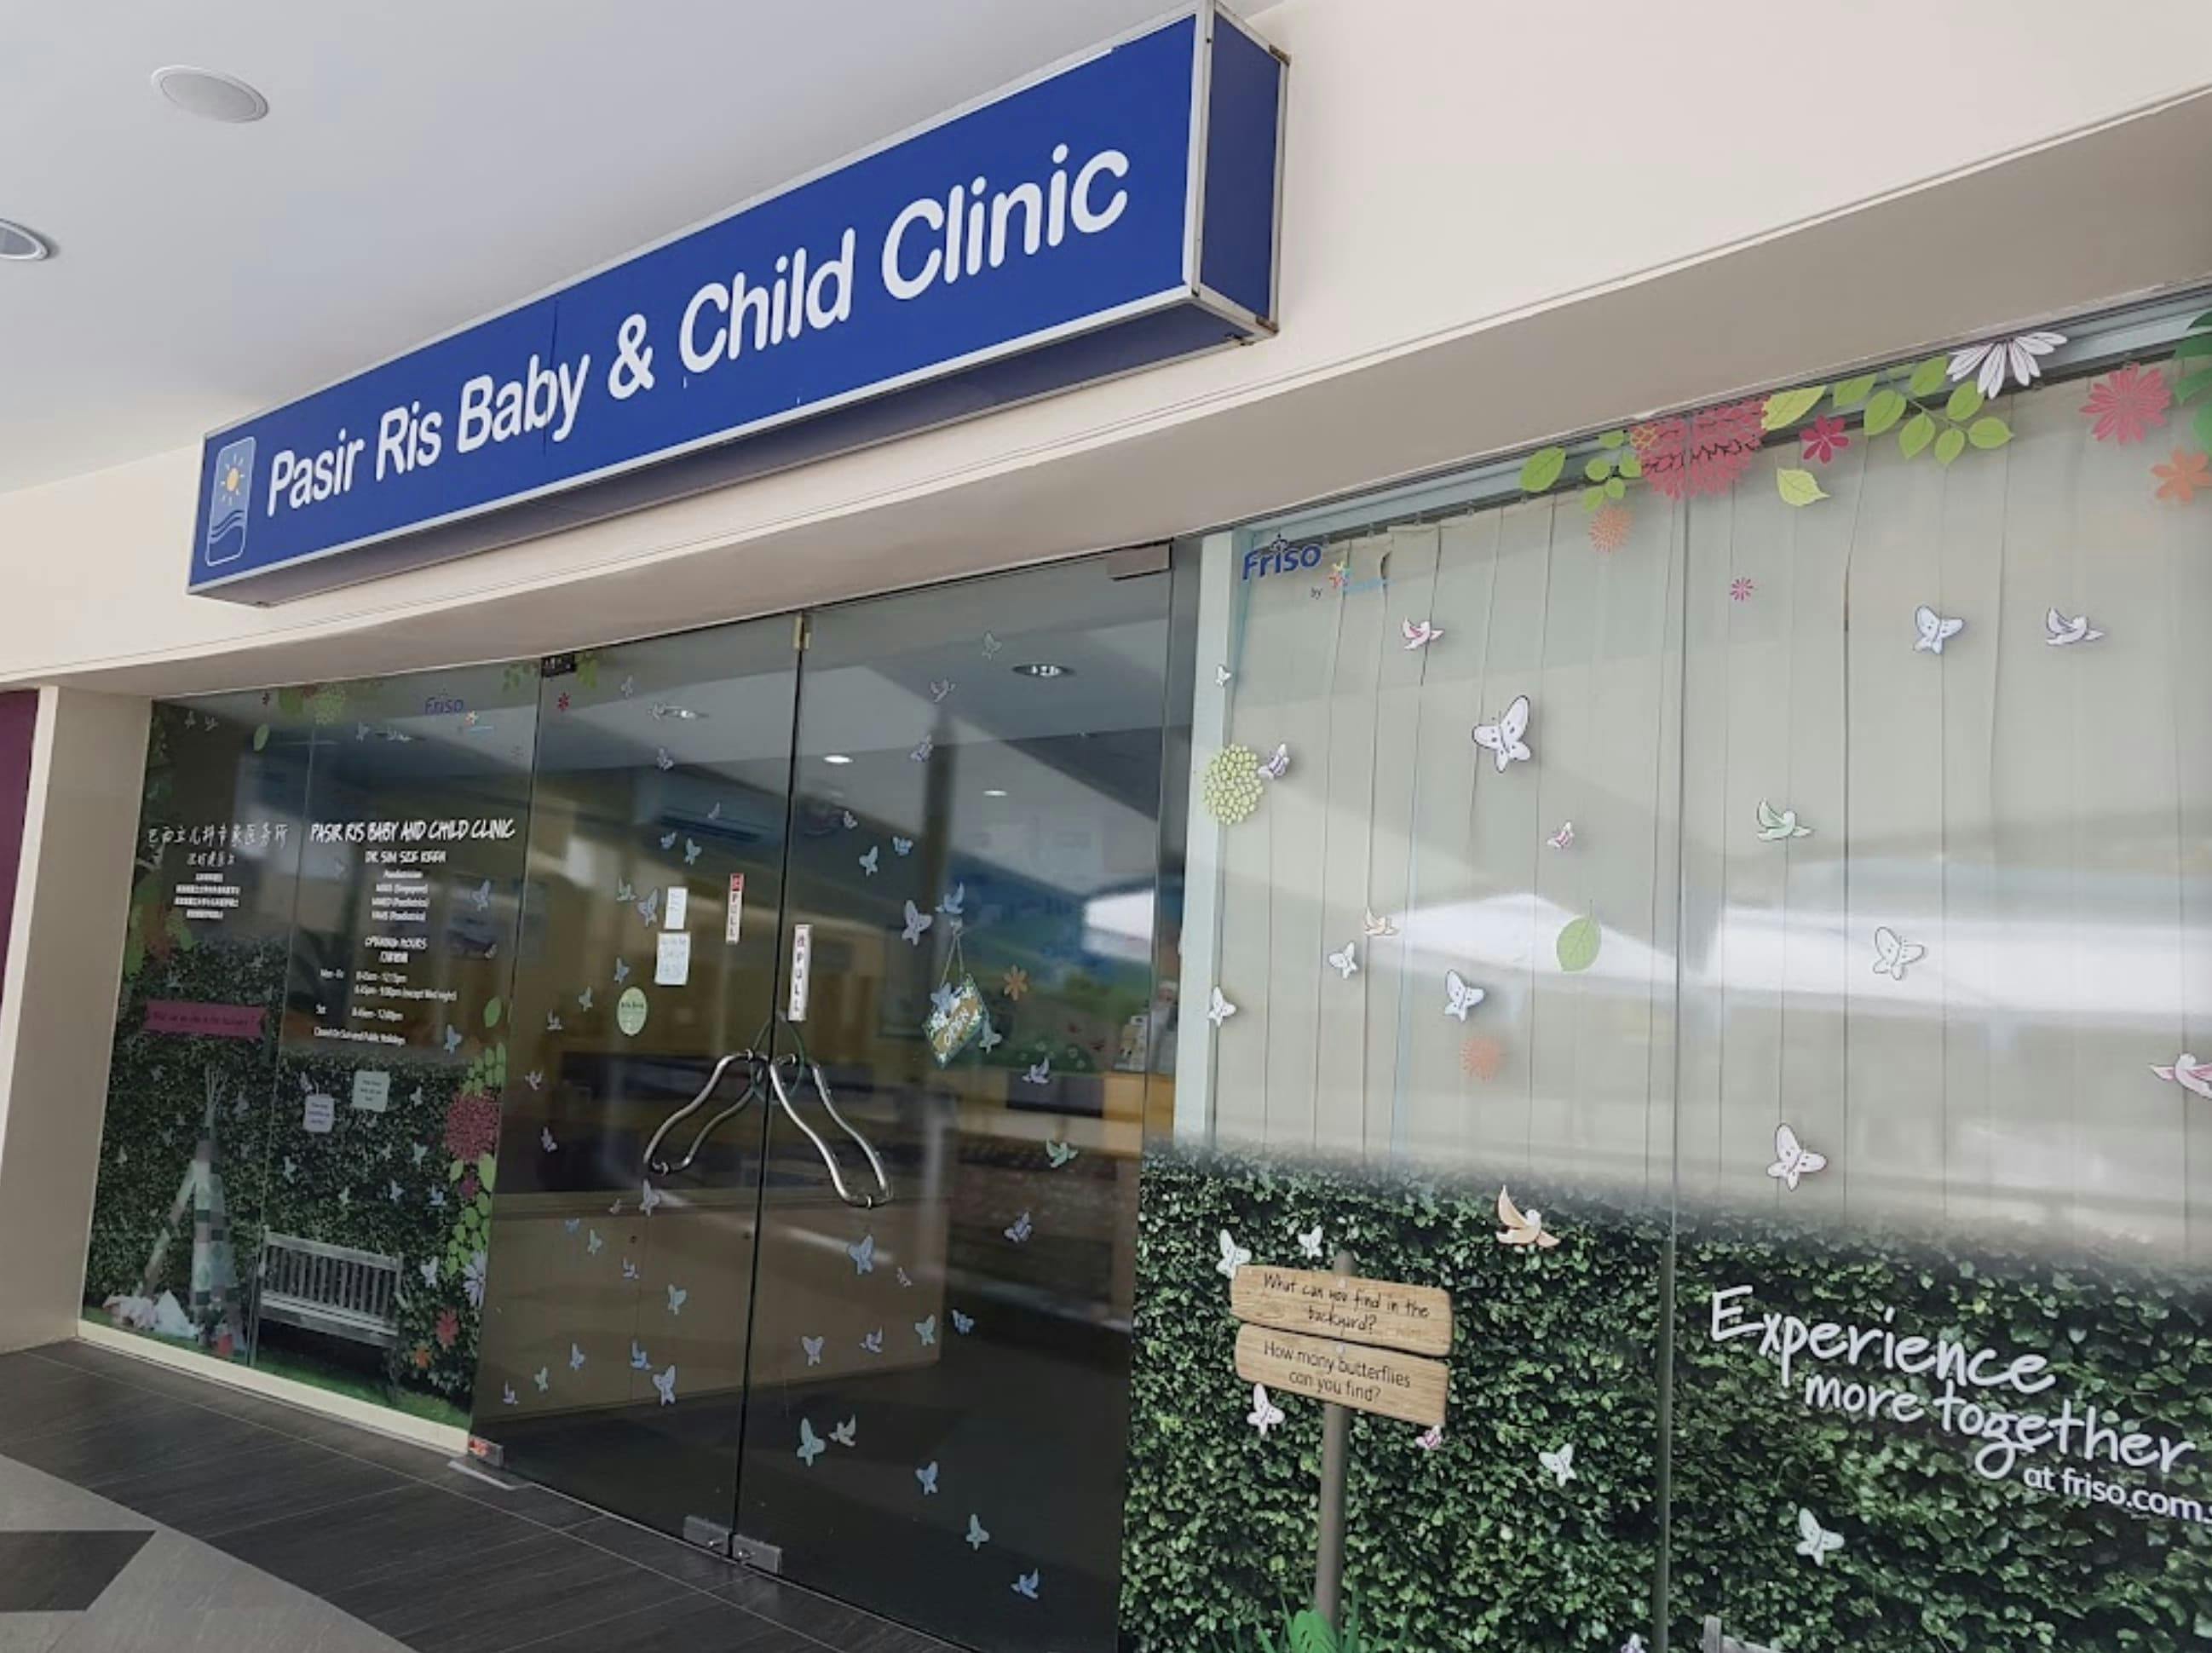 Pasir Ris Baby & Child Clinic